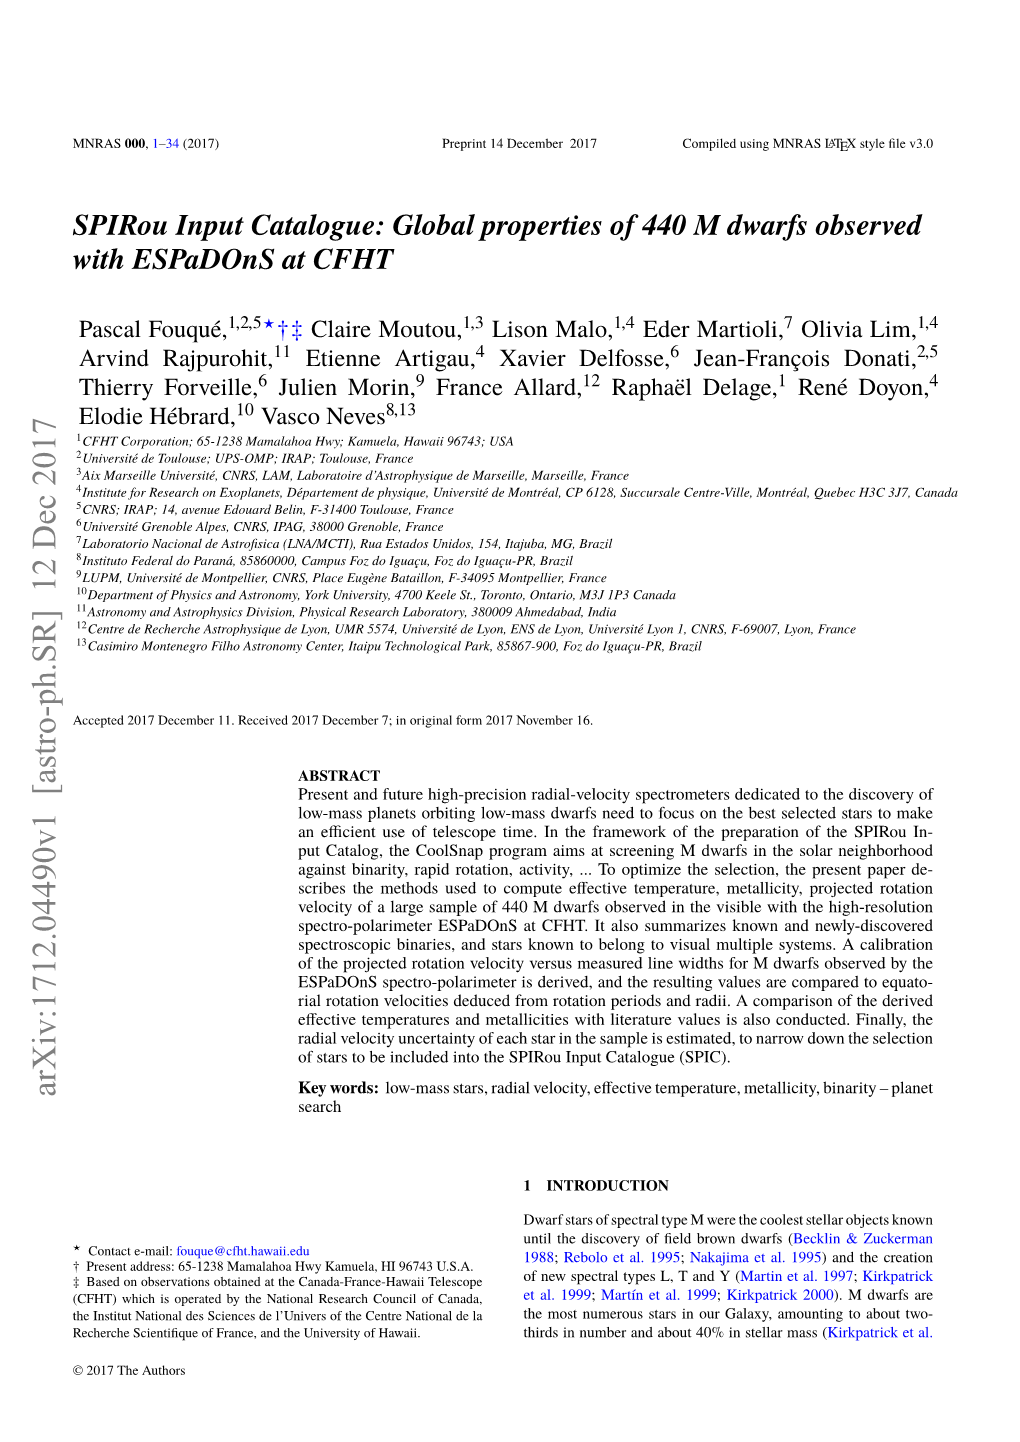 Spirou Input Catalogue: Global Properties of 440 M Dwarfs Observed with Espadons at CFHT